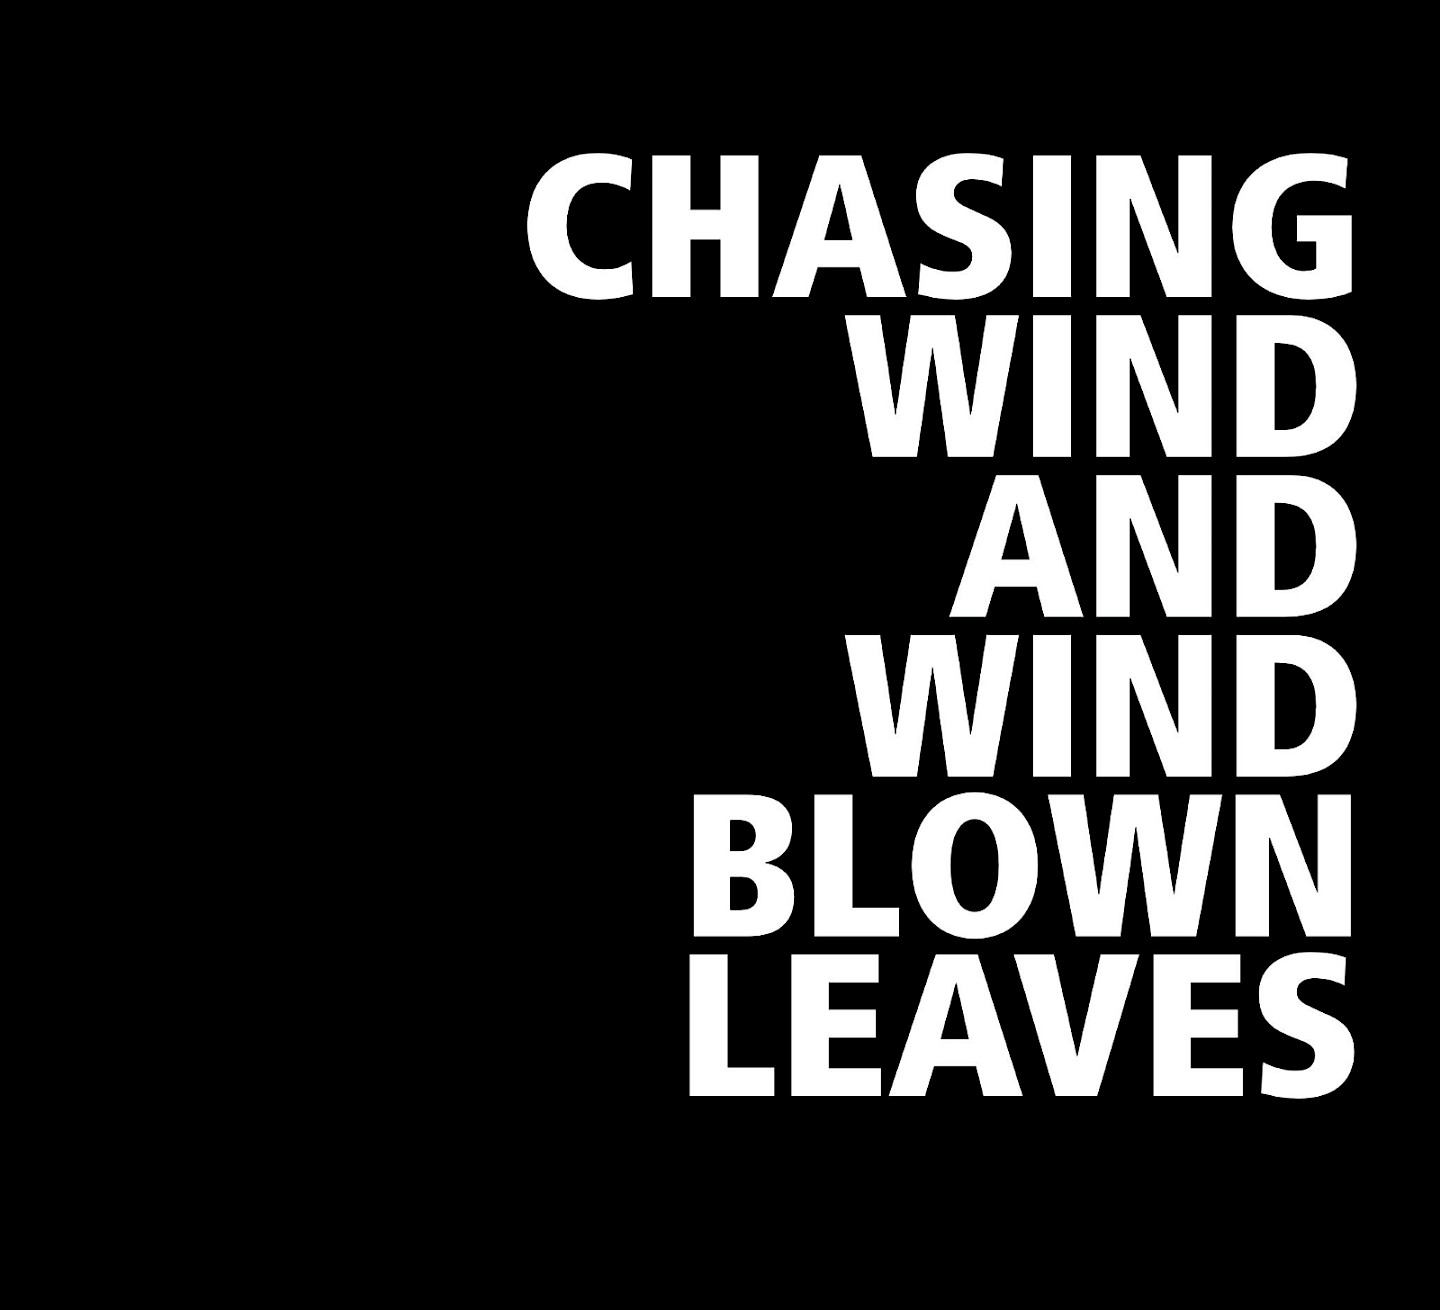 Joel Eschbach "Chasing wind and windblown leaves"